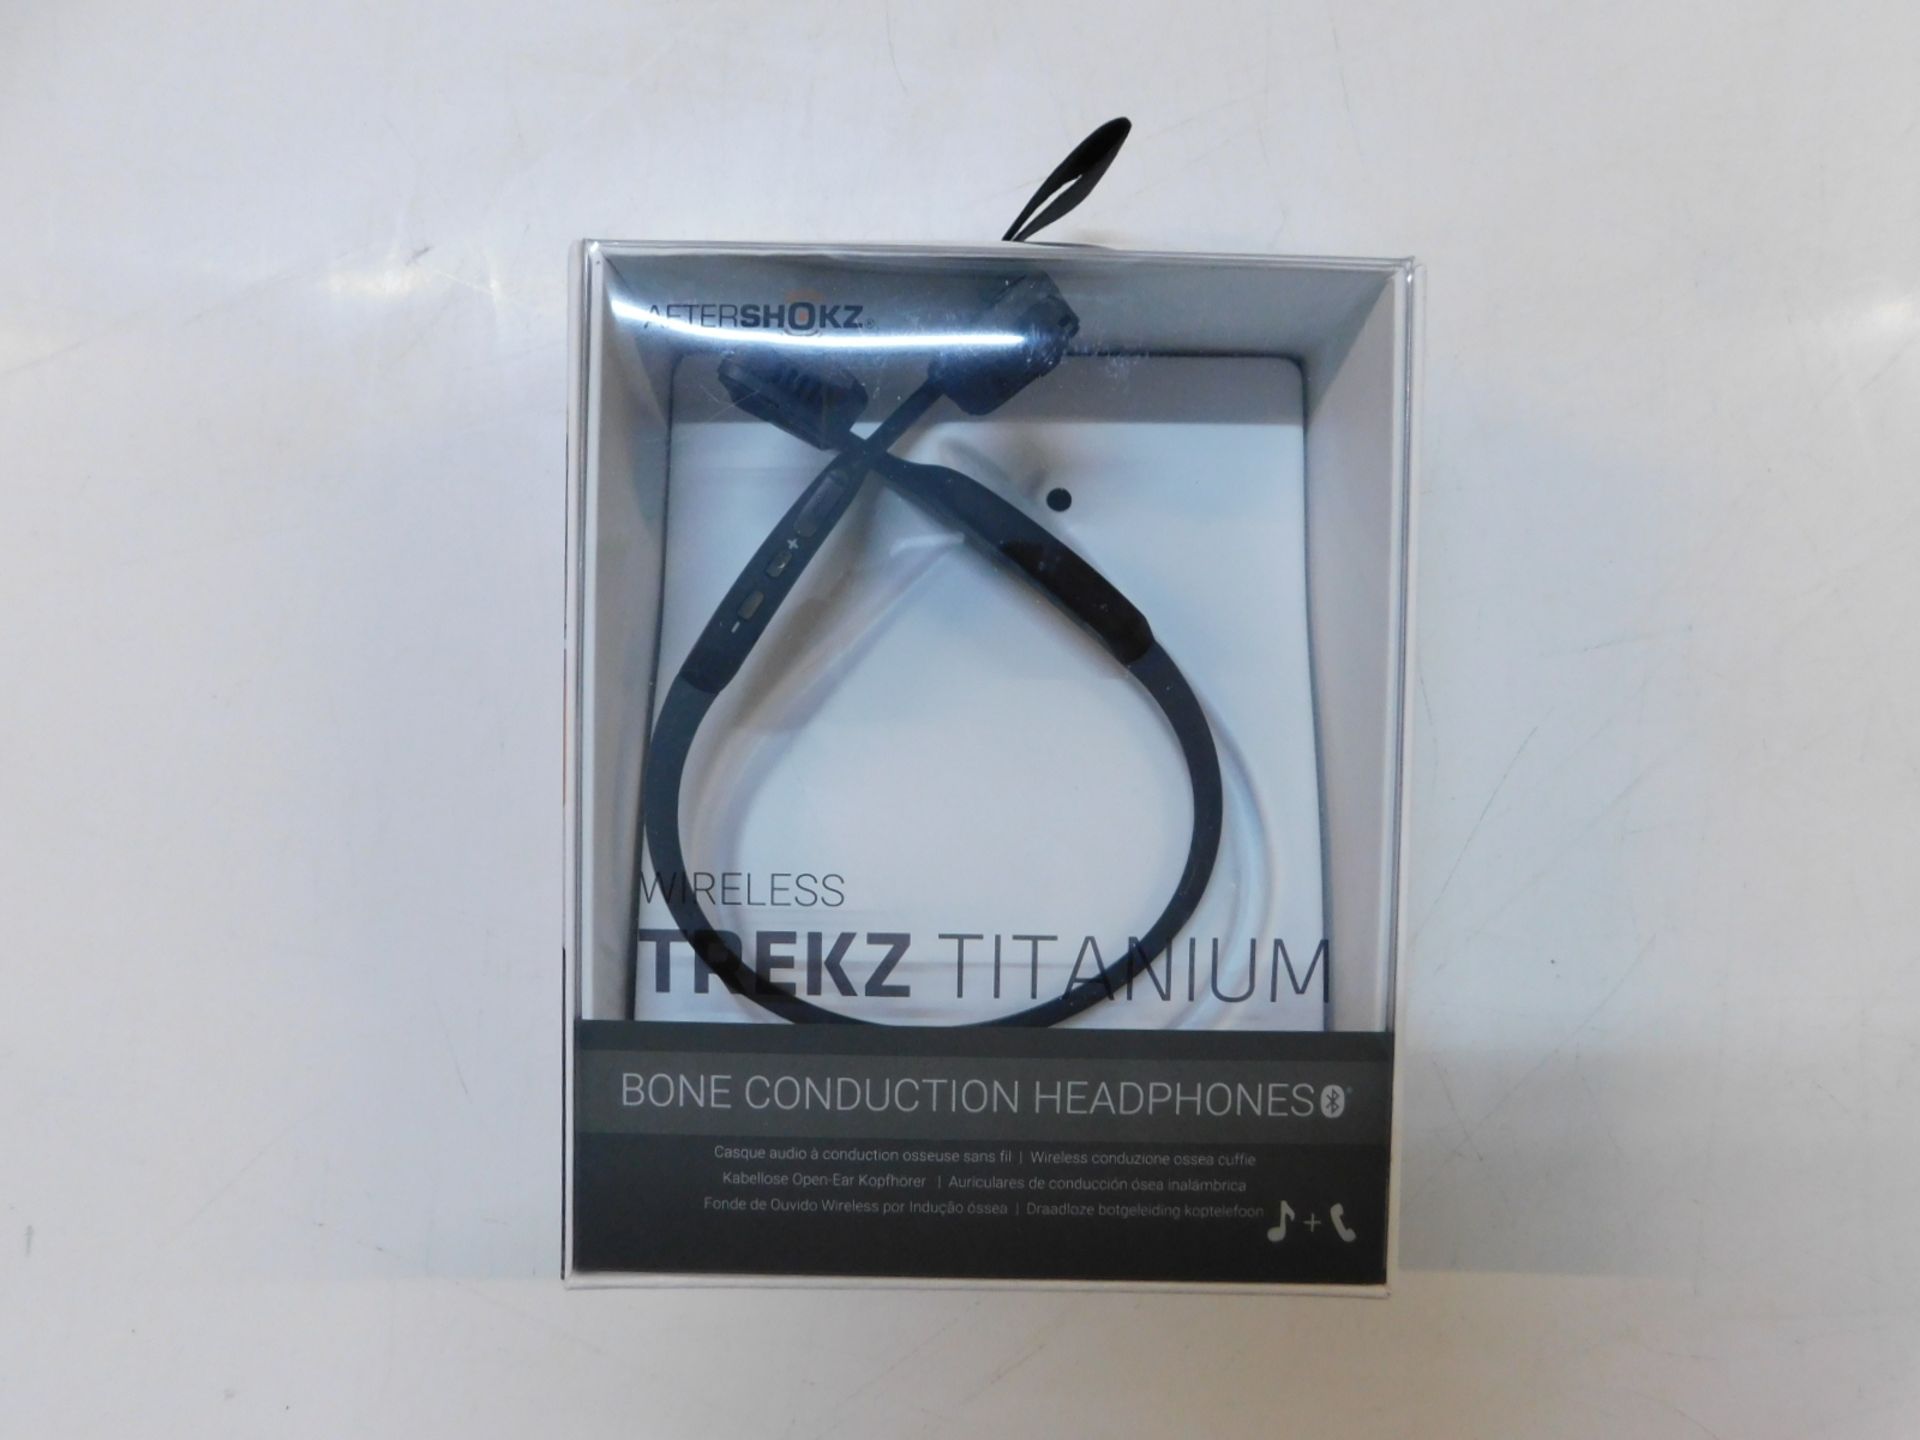 1 BOXED TREKZ TITANIUM BONE CONDUCTION WIRELESS HEADPHONES RRP Â£89.99